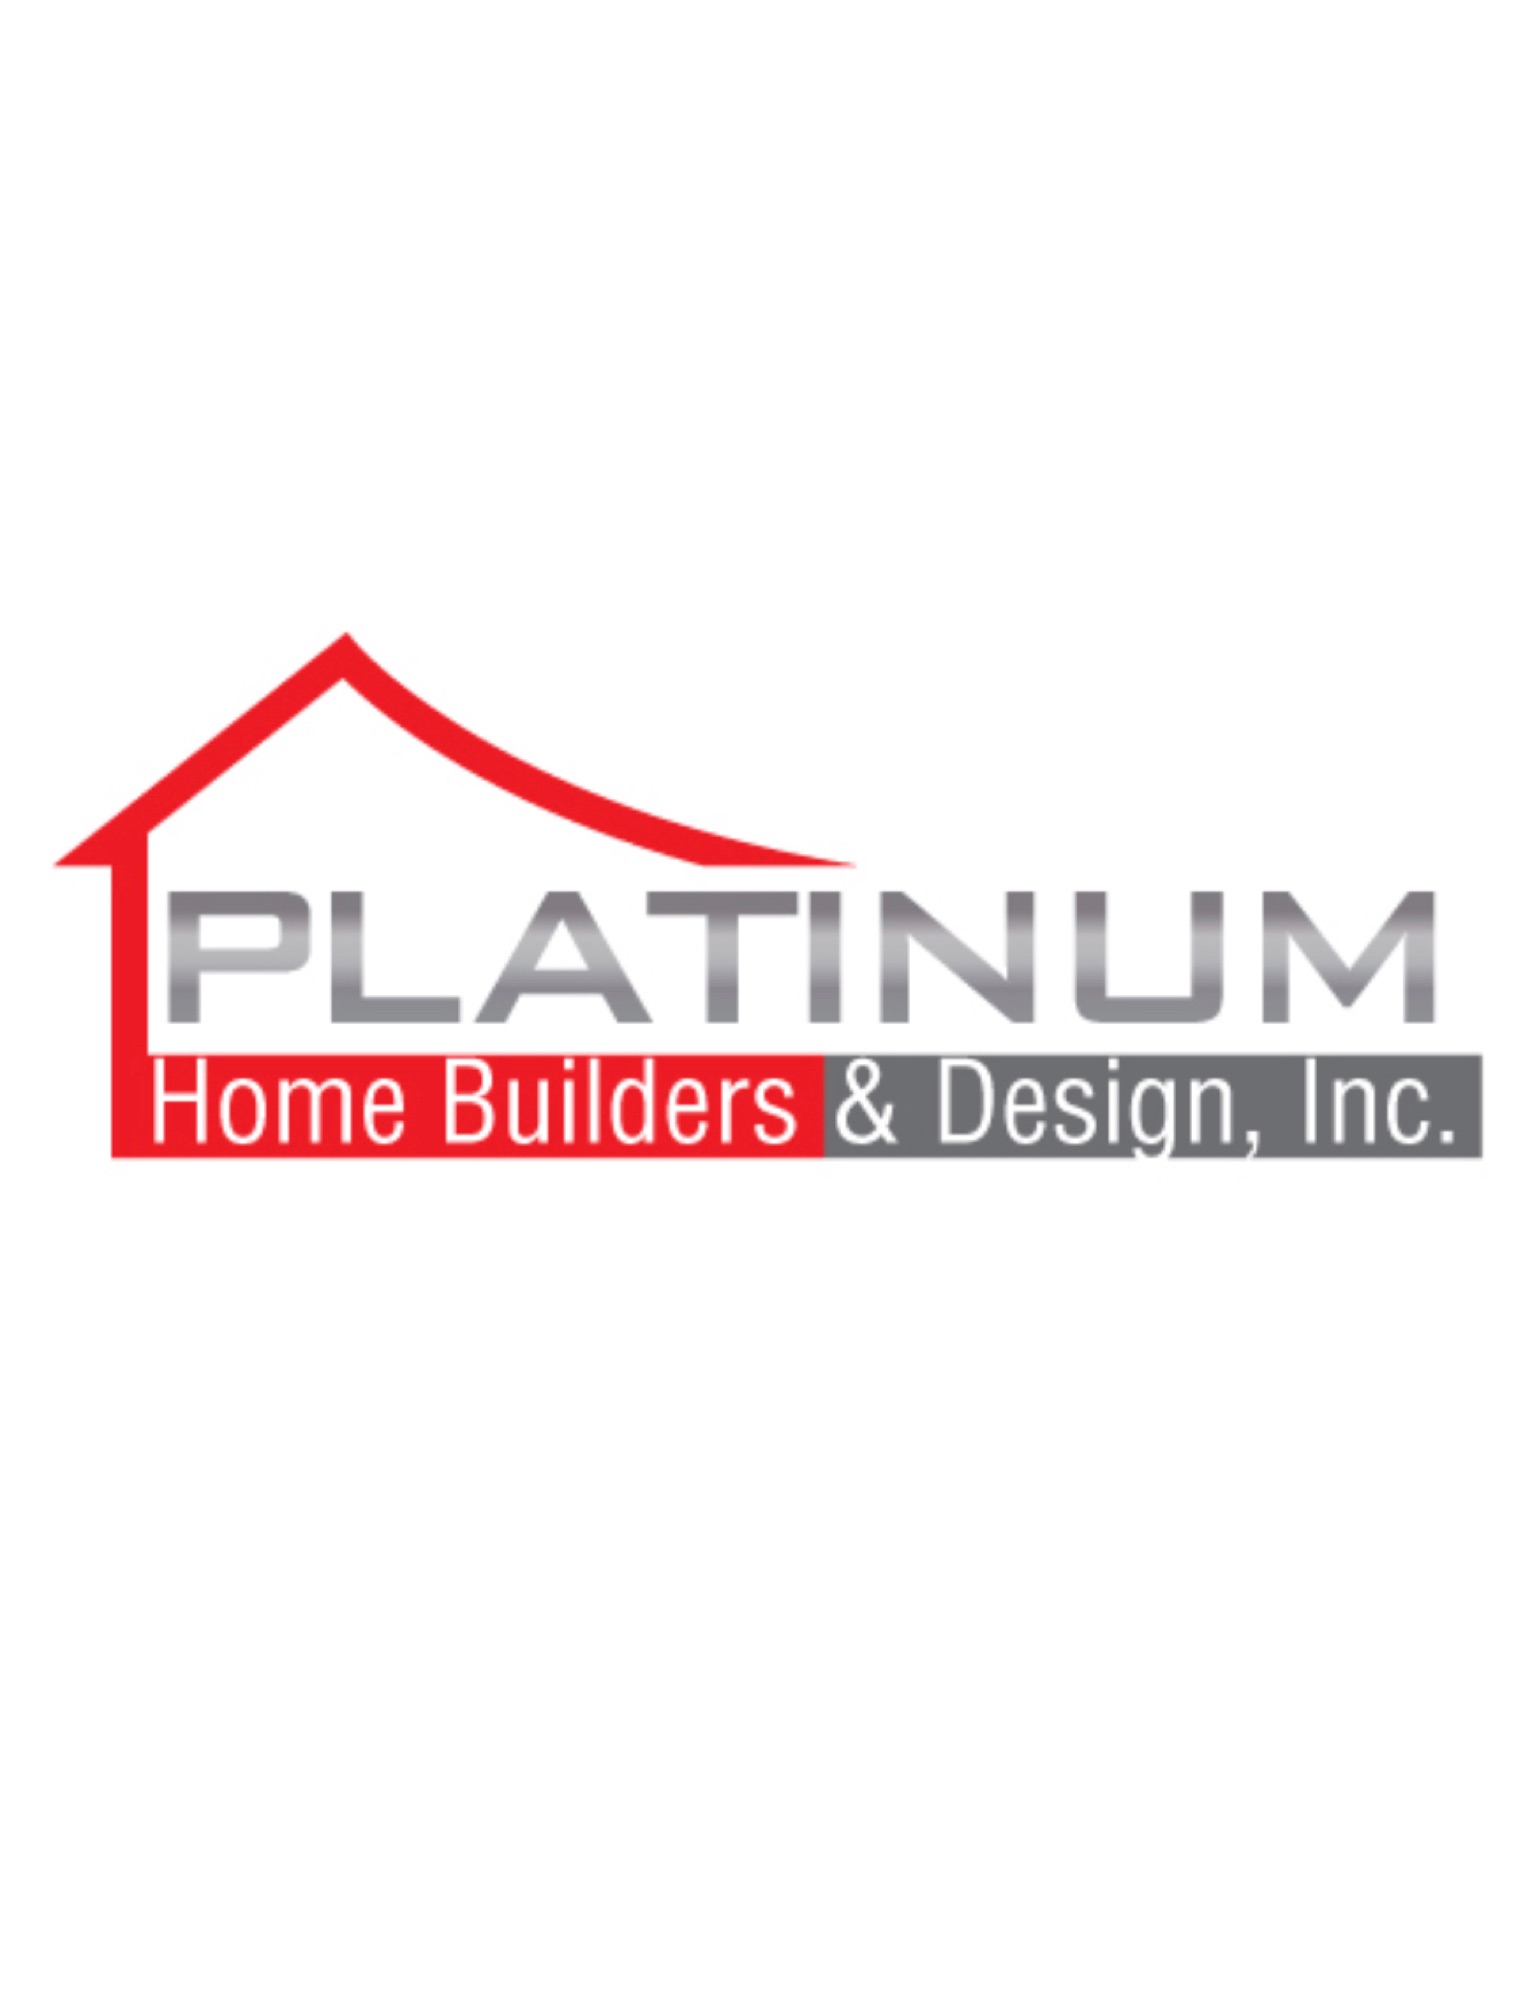 Platinum Home Builders & Design, Inc. Logo